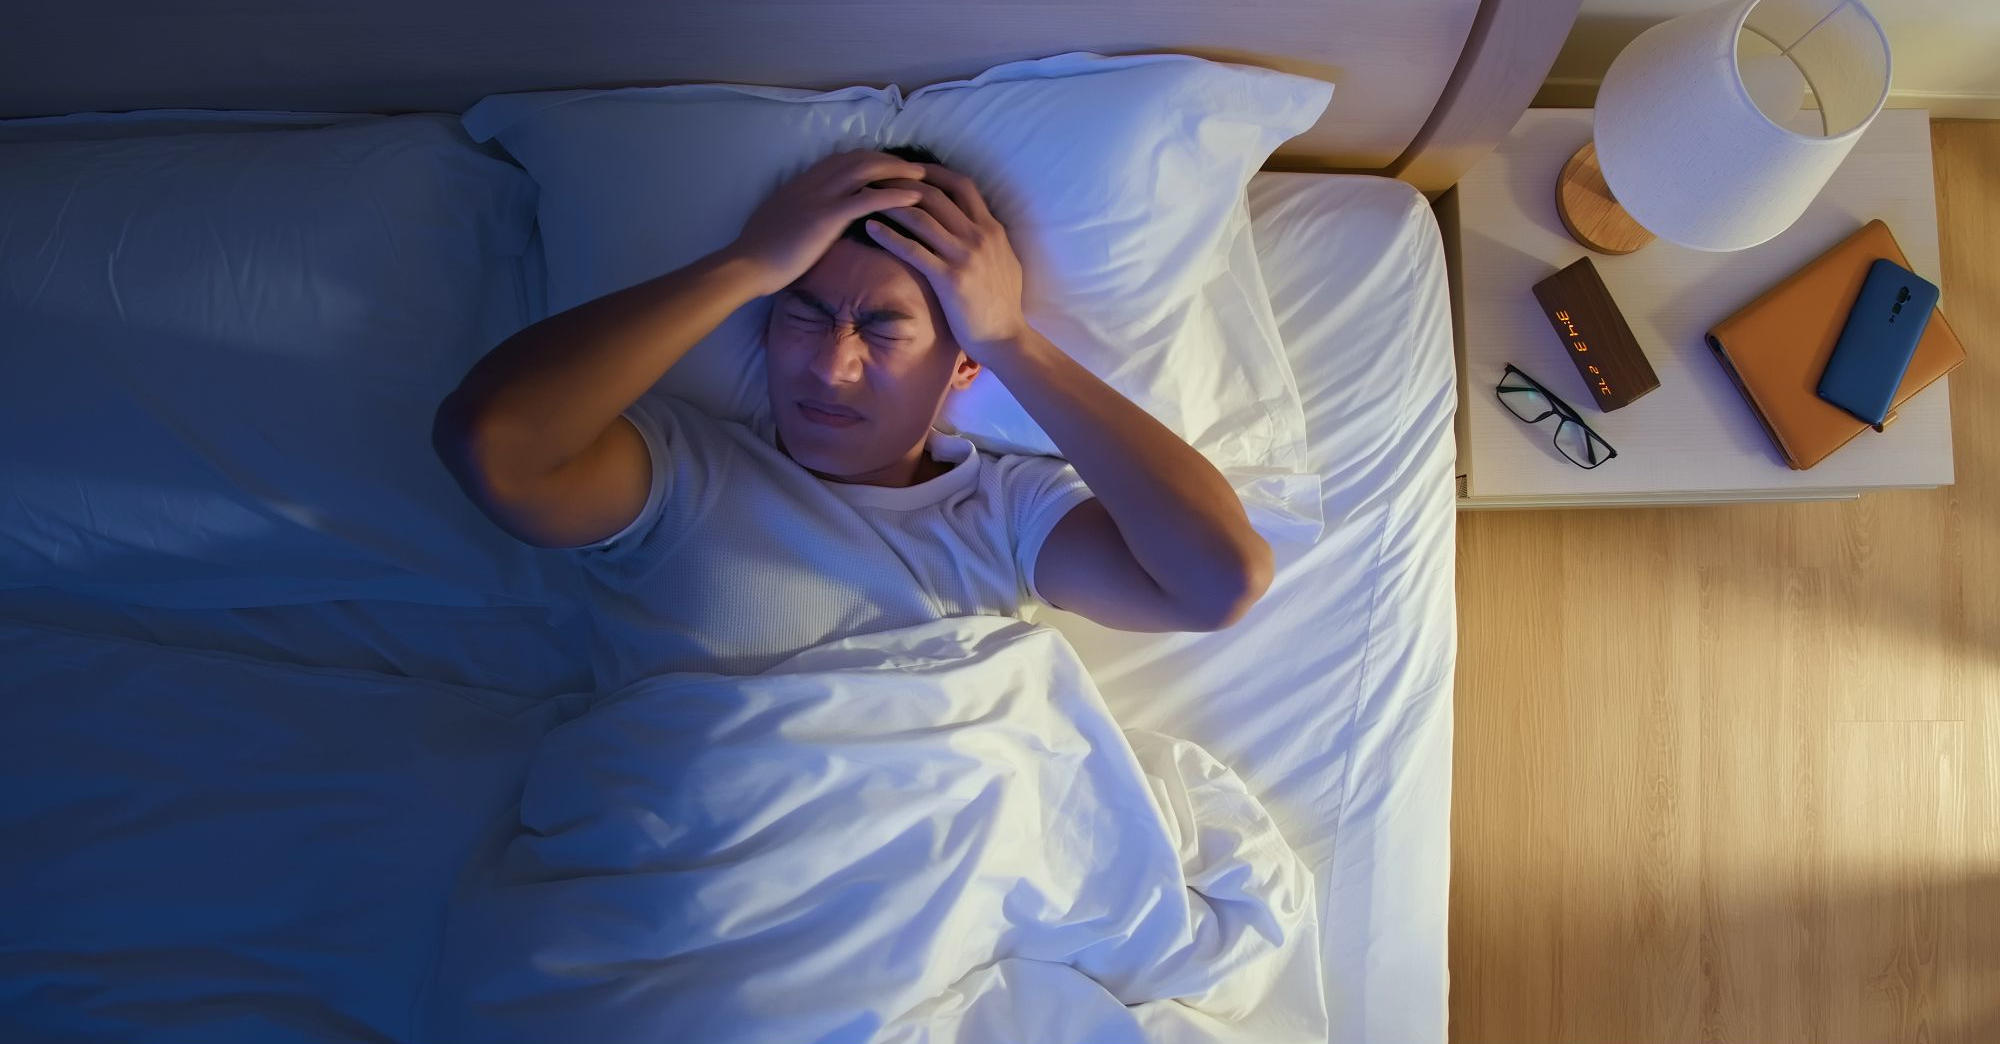 Is Your Sleep Schedule Making You Sick? New Research Links Irregular Sleep to Harmful Gut Bacteria